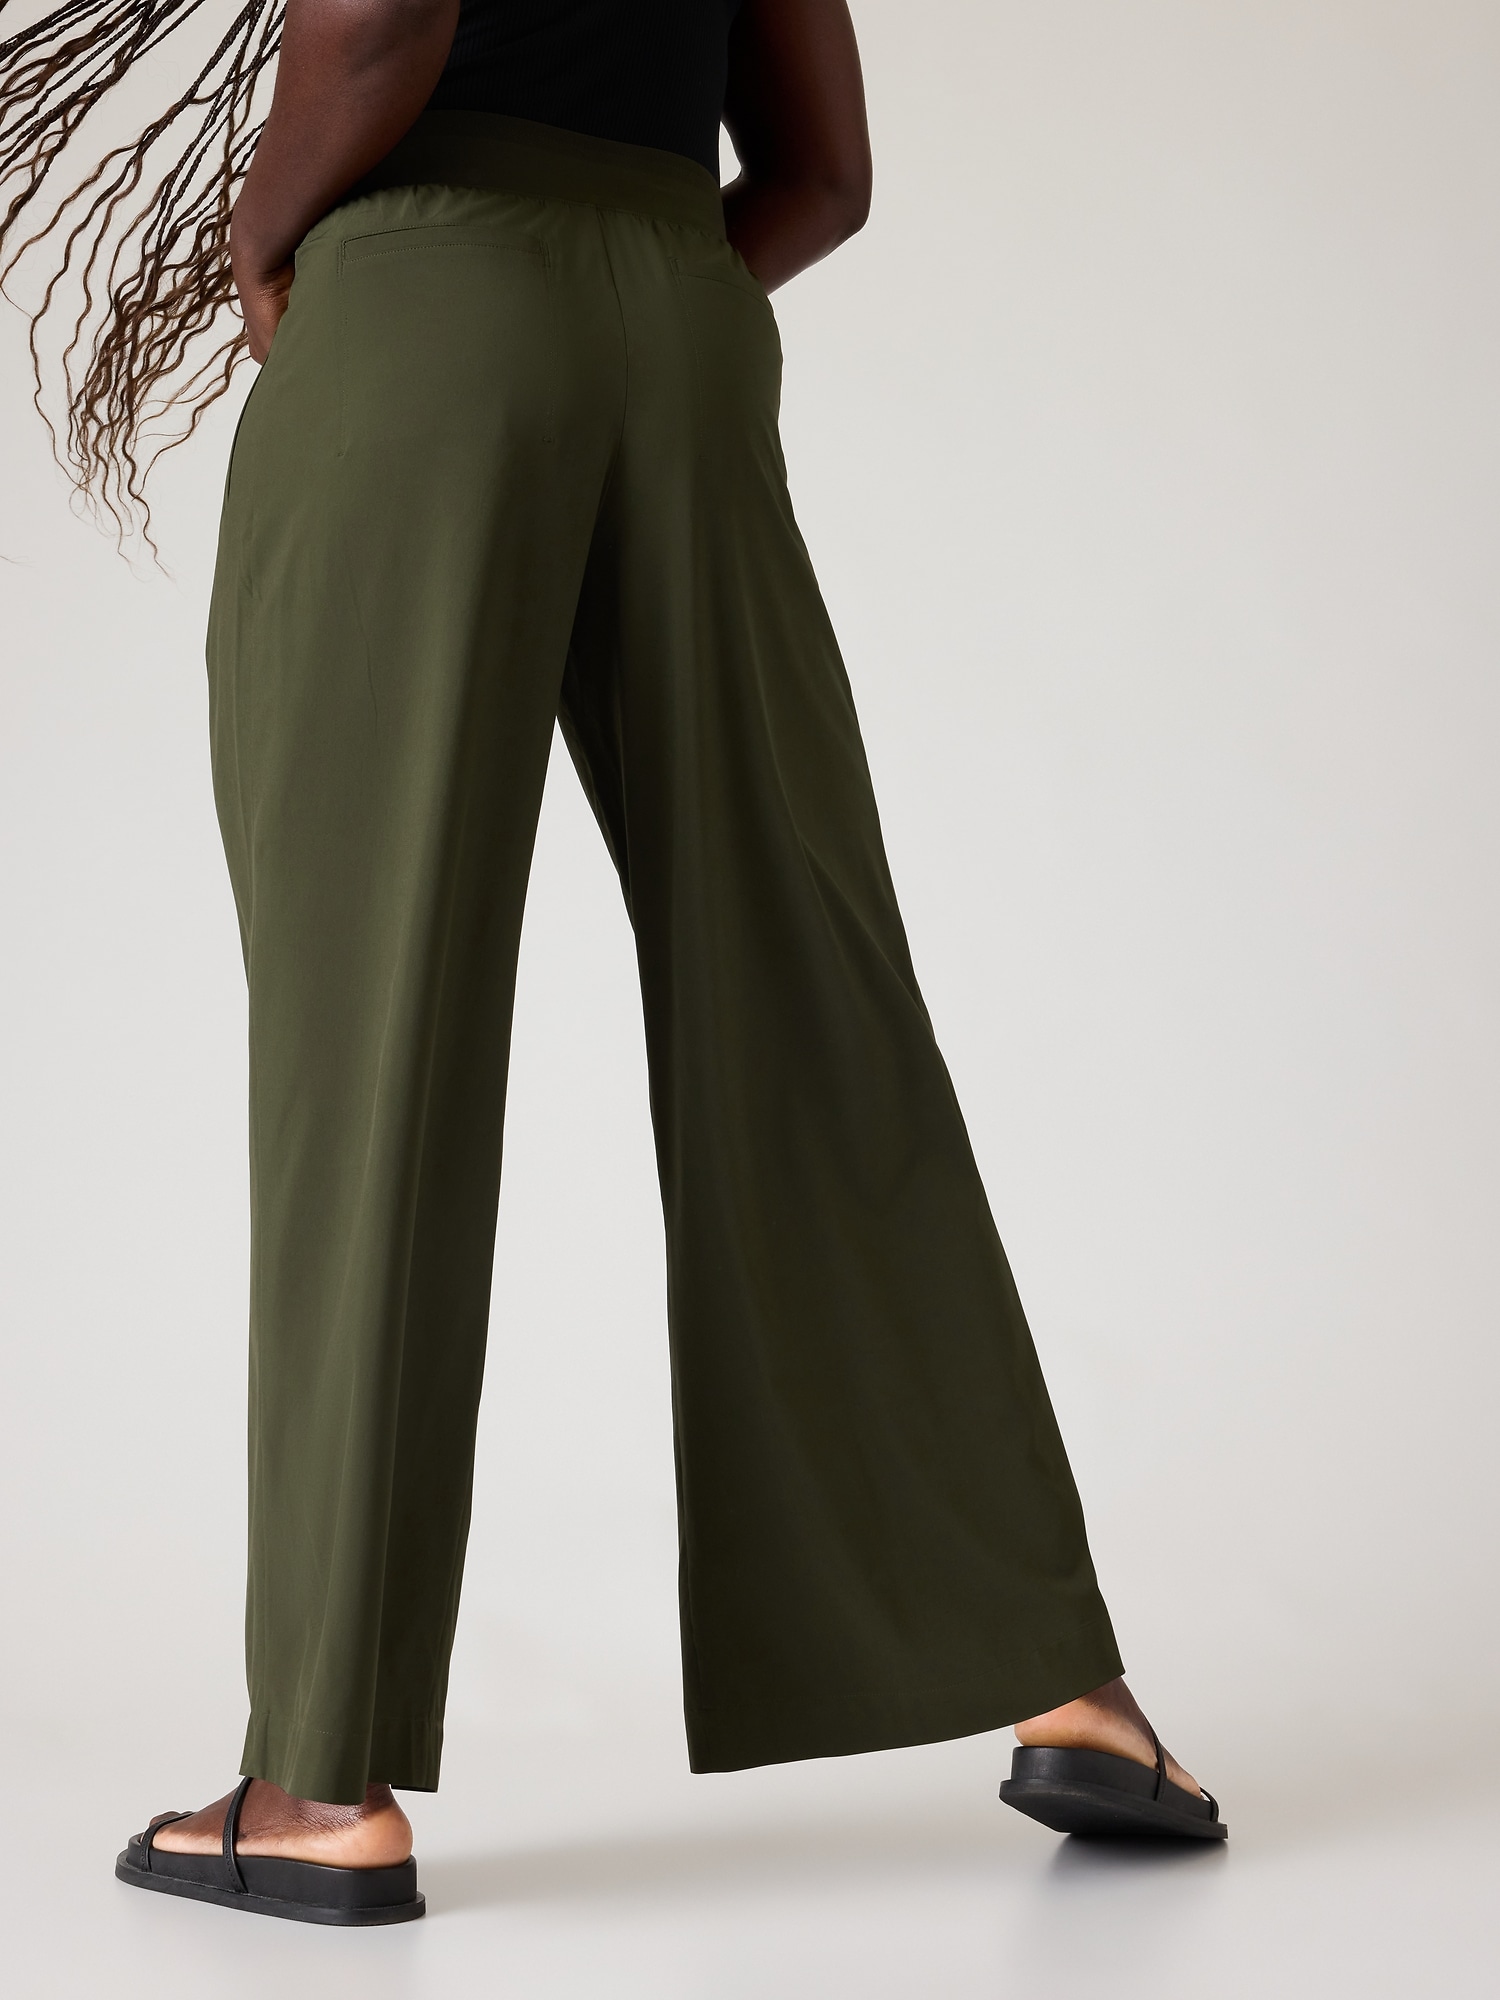 Athleta Olive Green Women's Pants With Zipper Pockets & Legs Size 2 